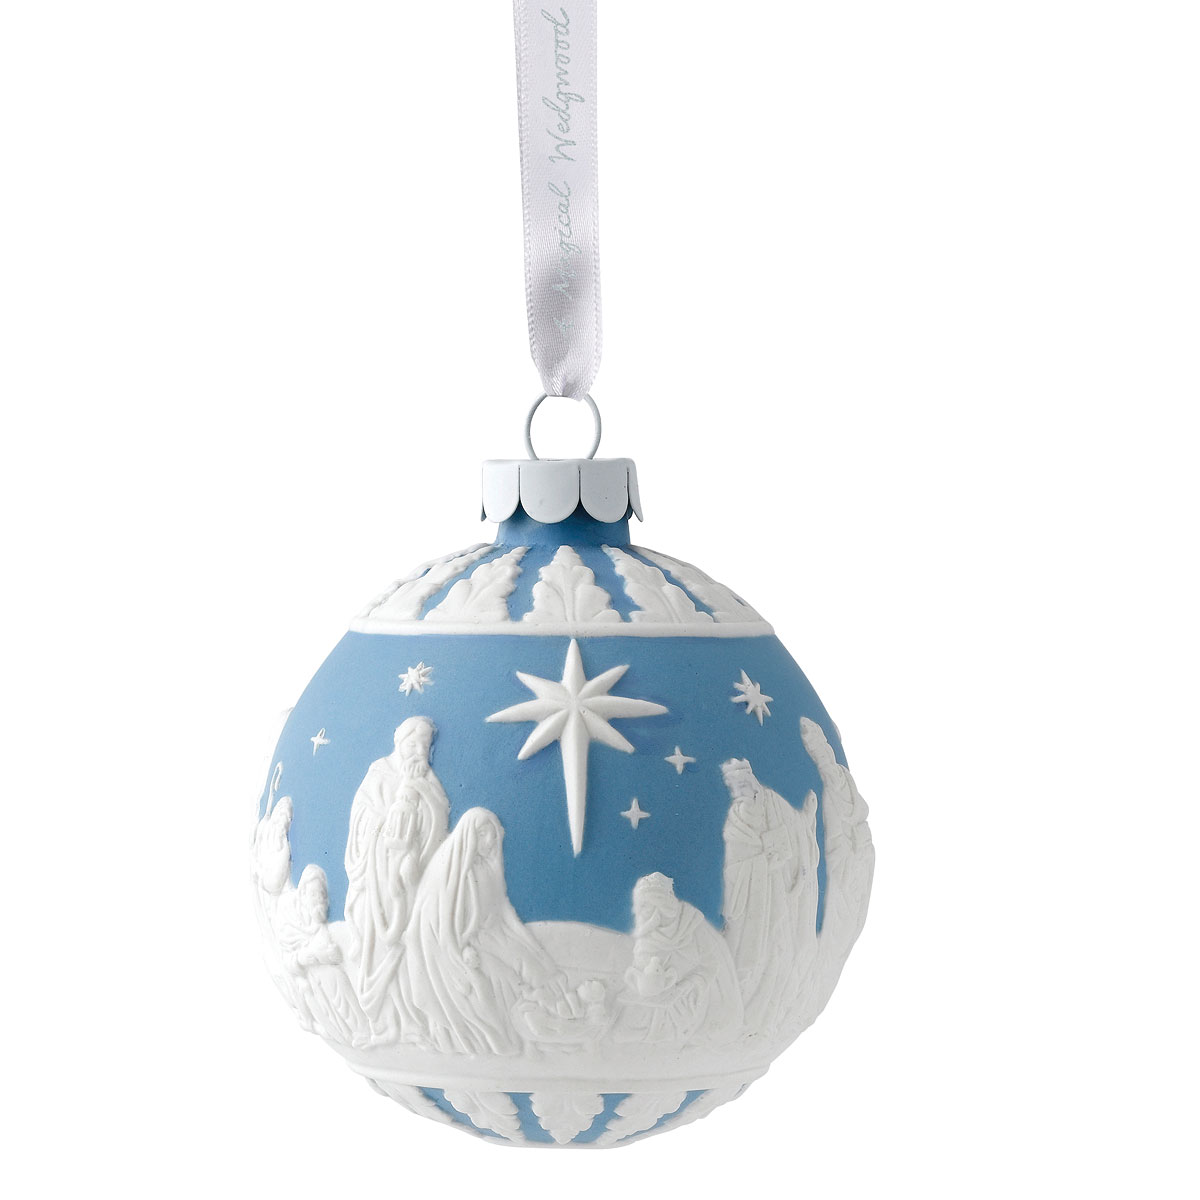 Wedgwood 2019 Nativity Christmas Ornament